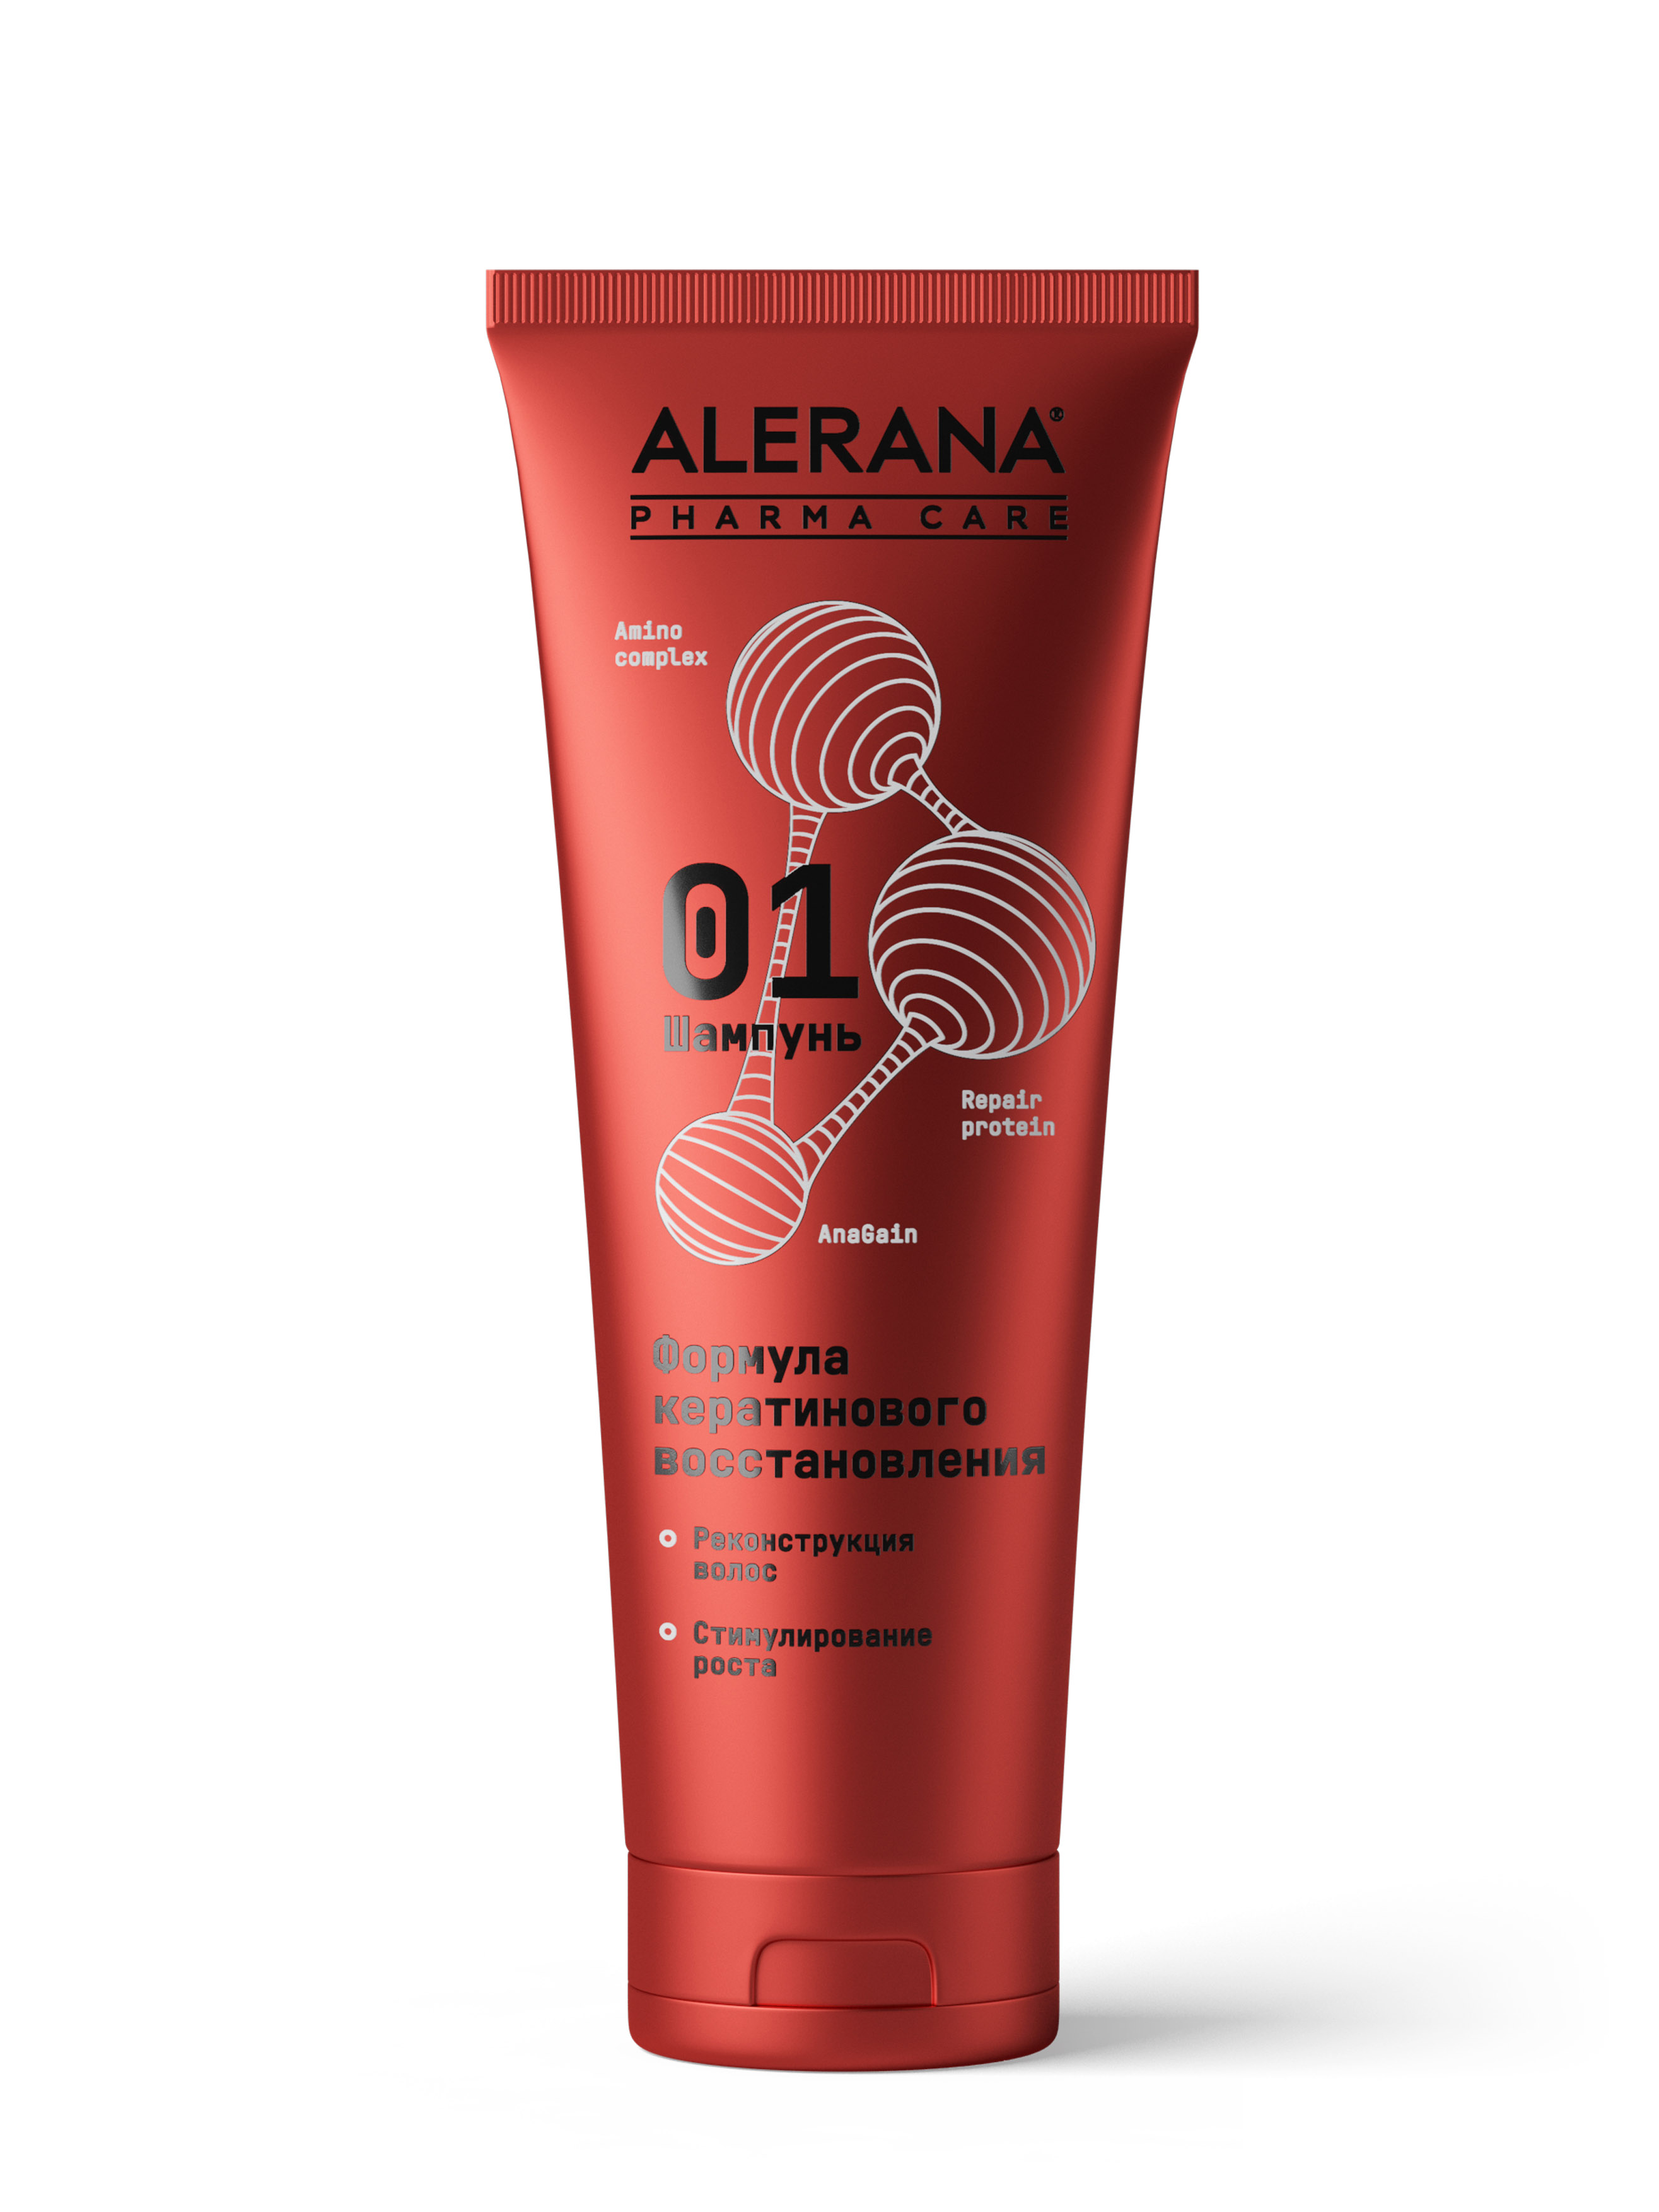 ALERANA<sup>®</sup> PHARMA CARE Shampoo – keratin restoration formula